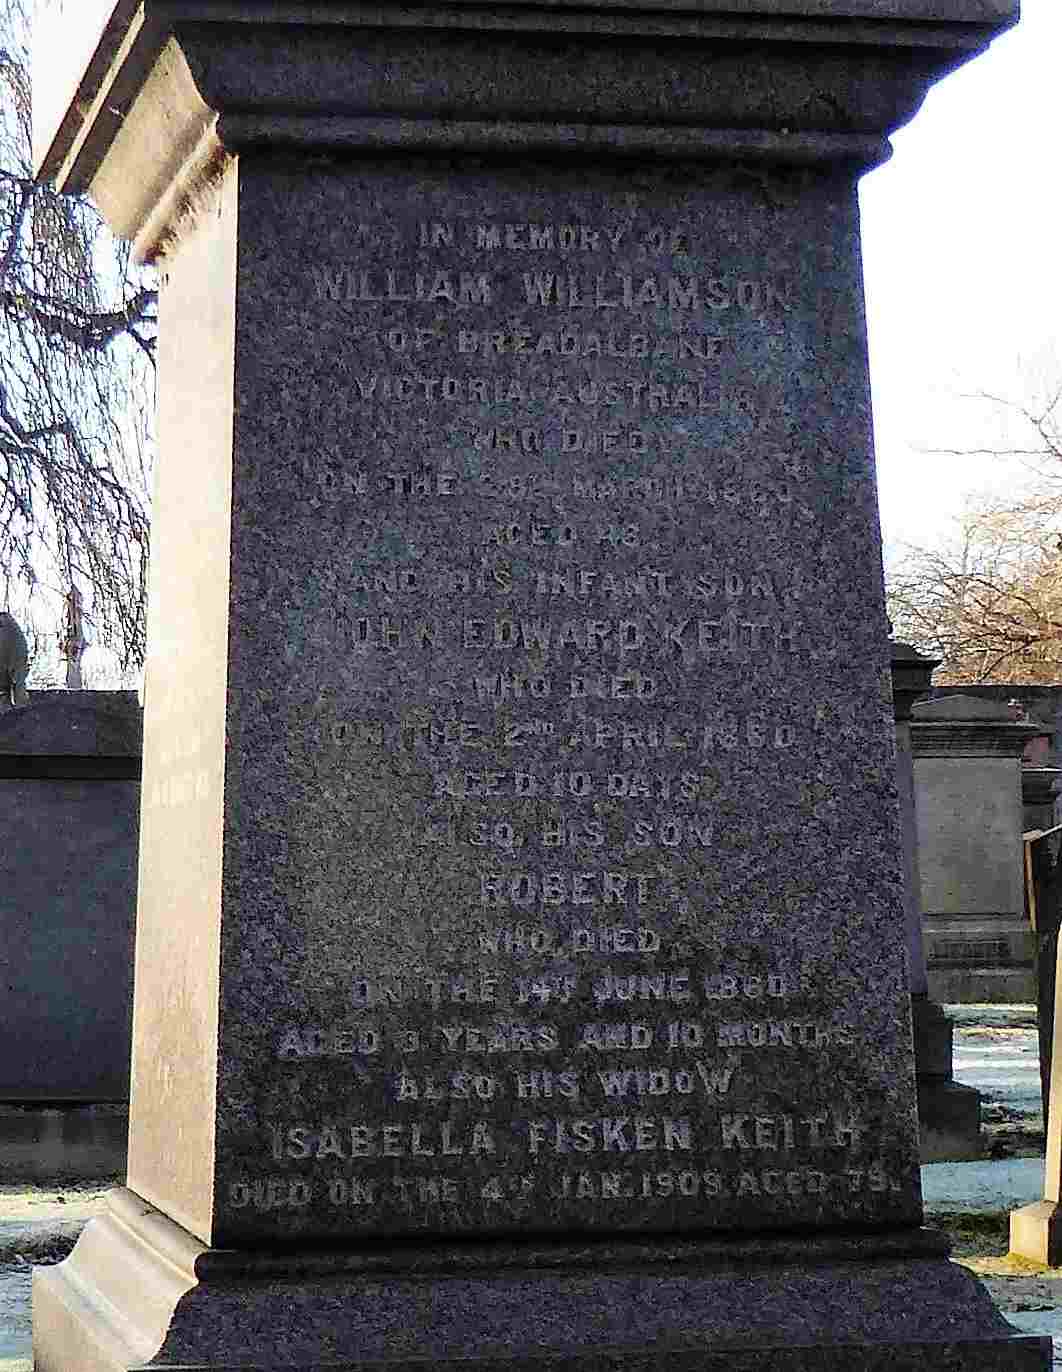 Headstone of the grave of William Williamson